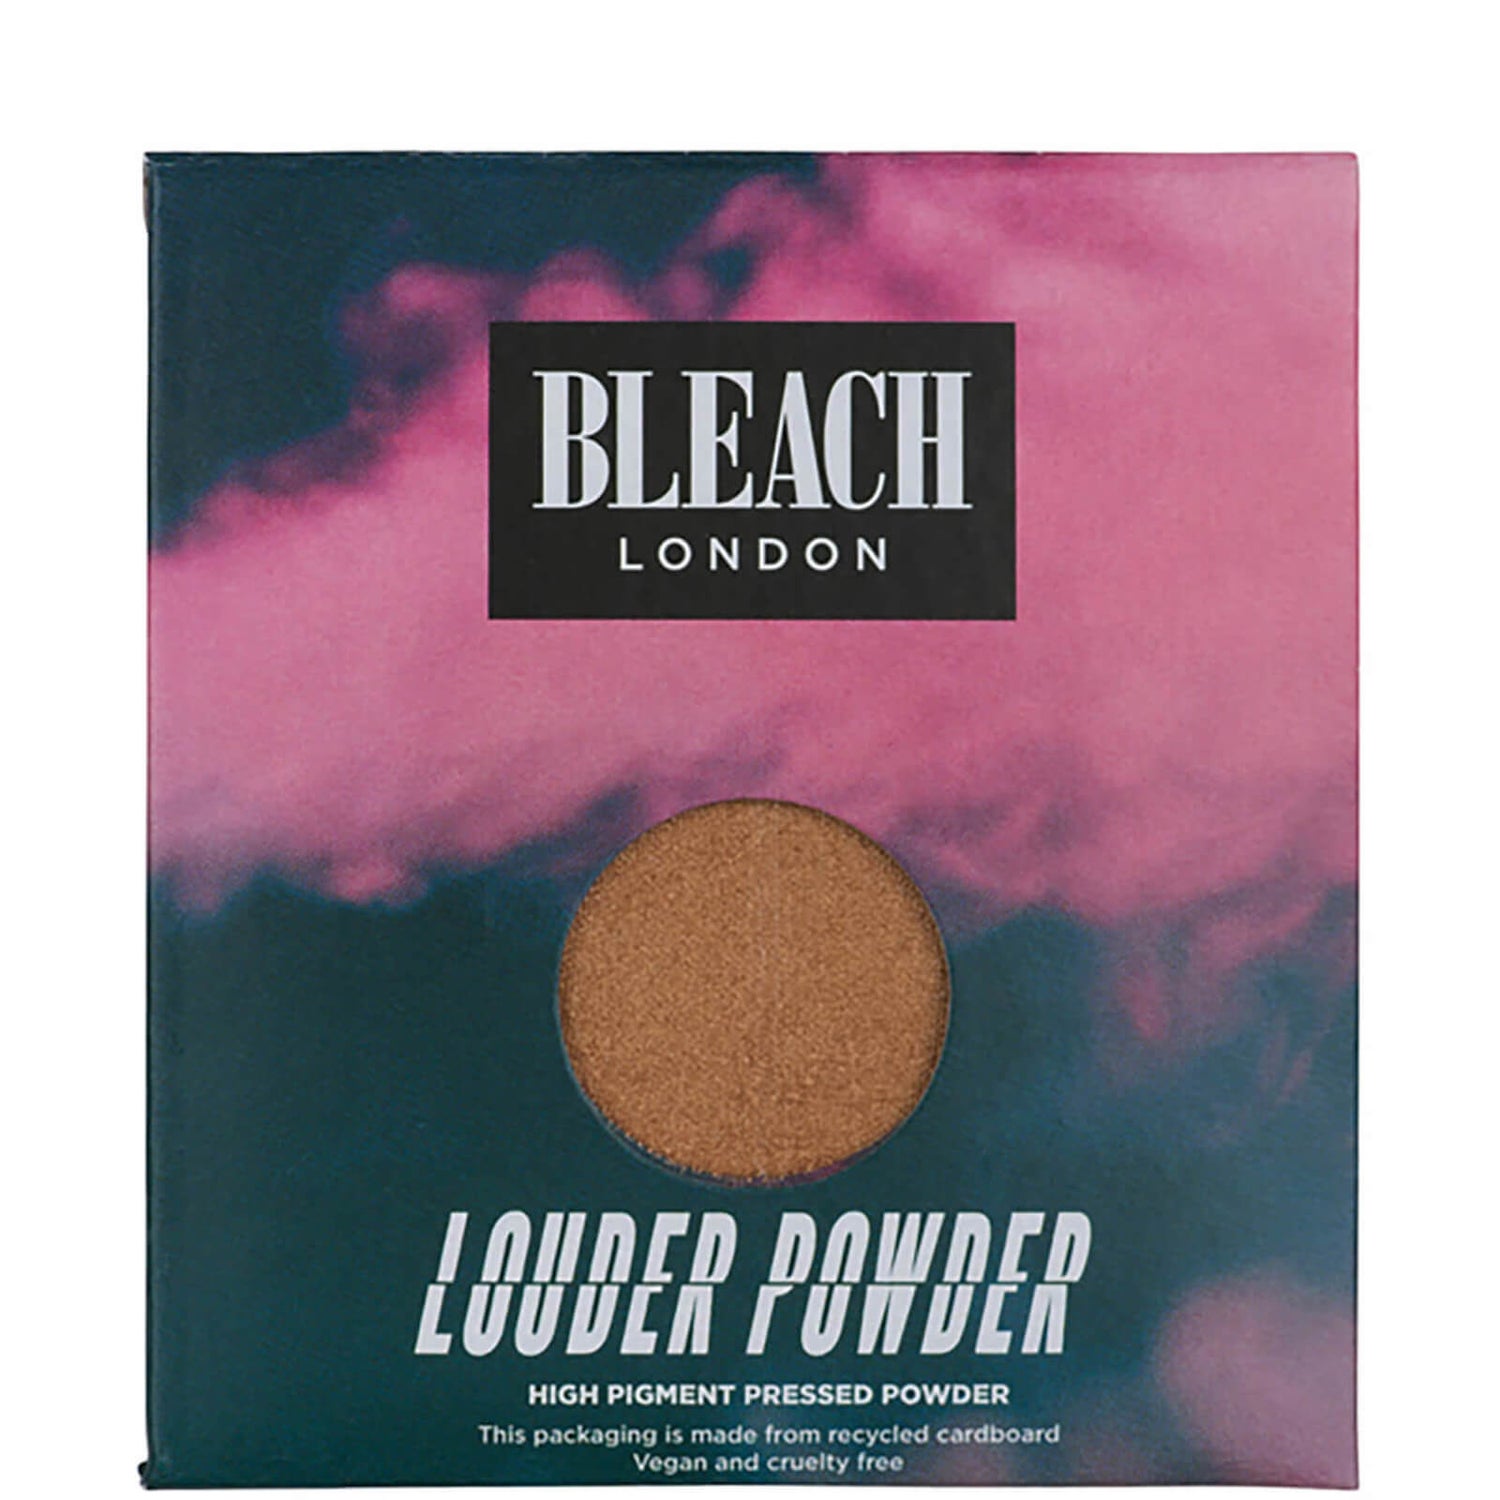 BLEACH LONDON Louder Powder Rg 3 Me(블리치 런던 라우더 파우더 Rg 3 Me)